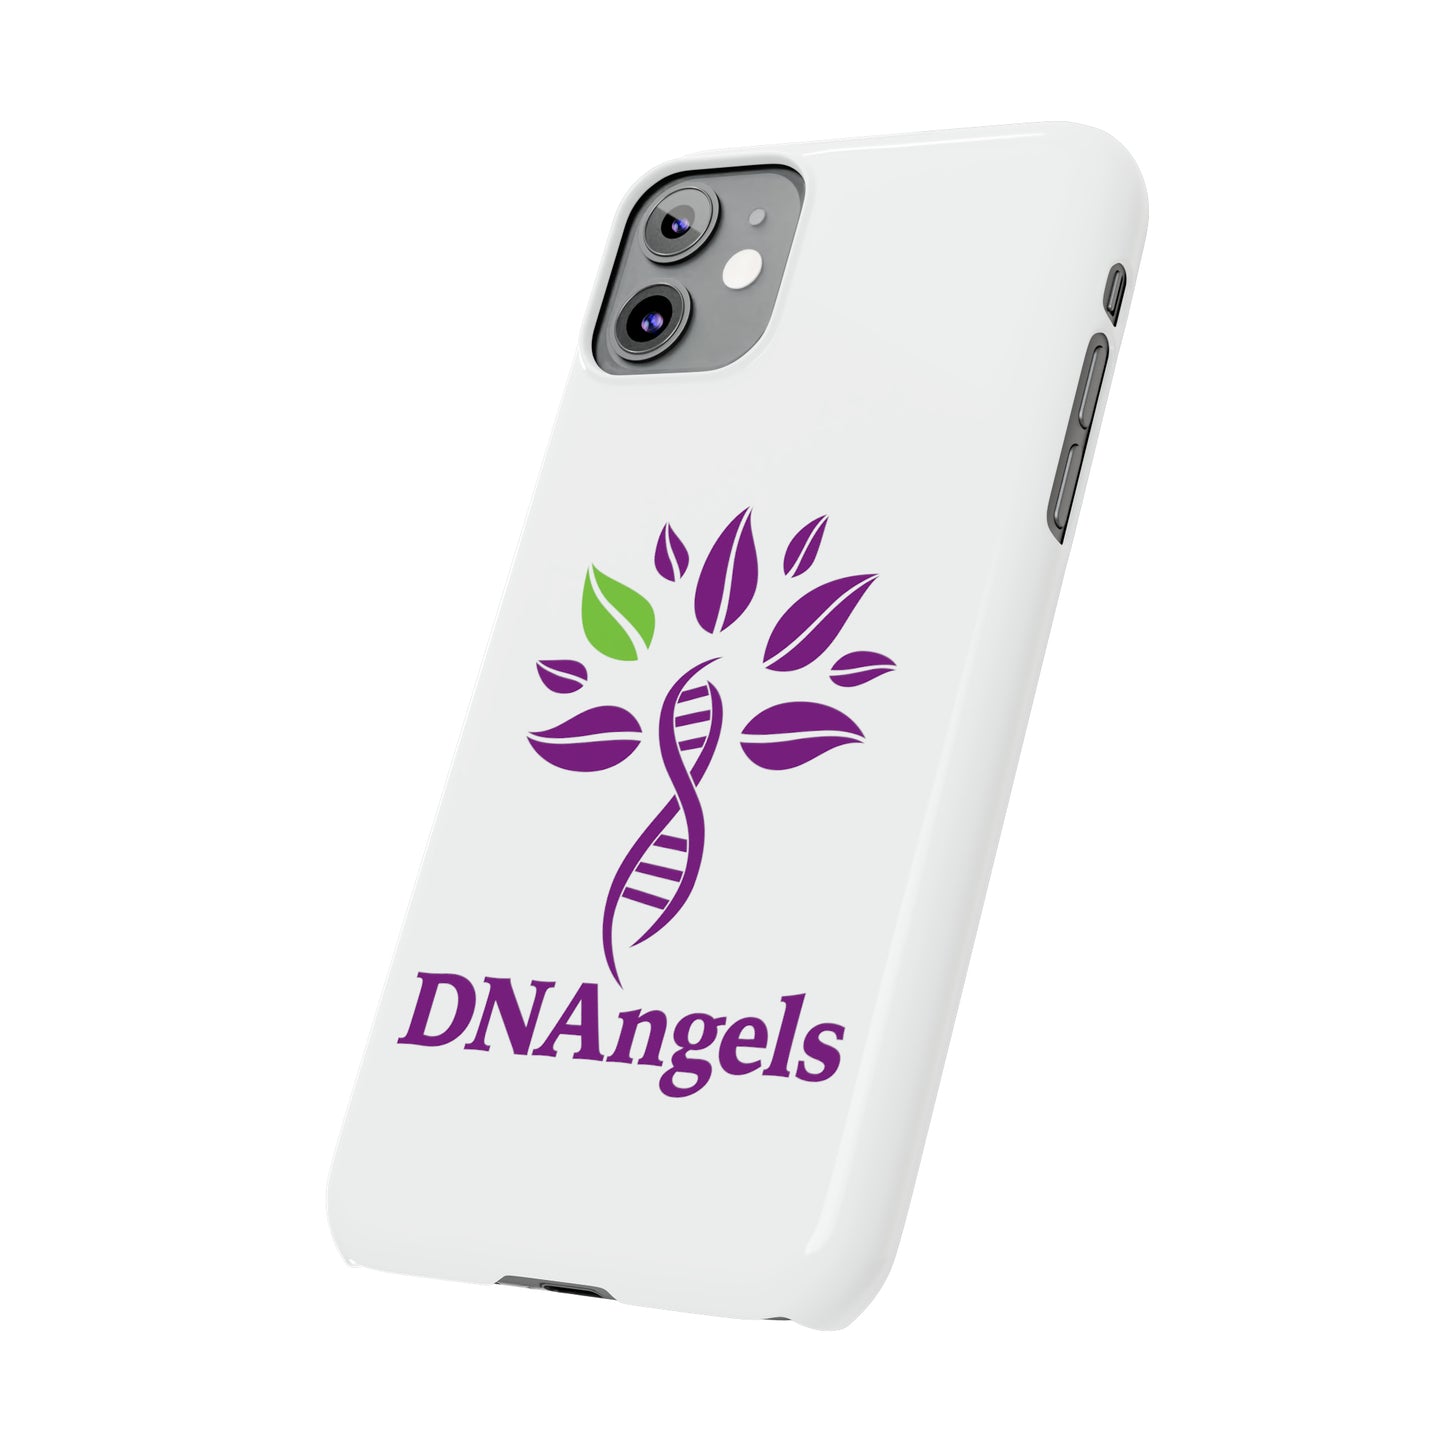 DNAngels Slim iPhone Case